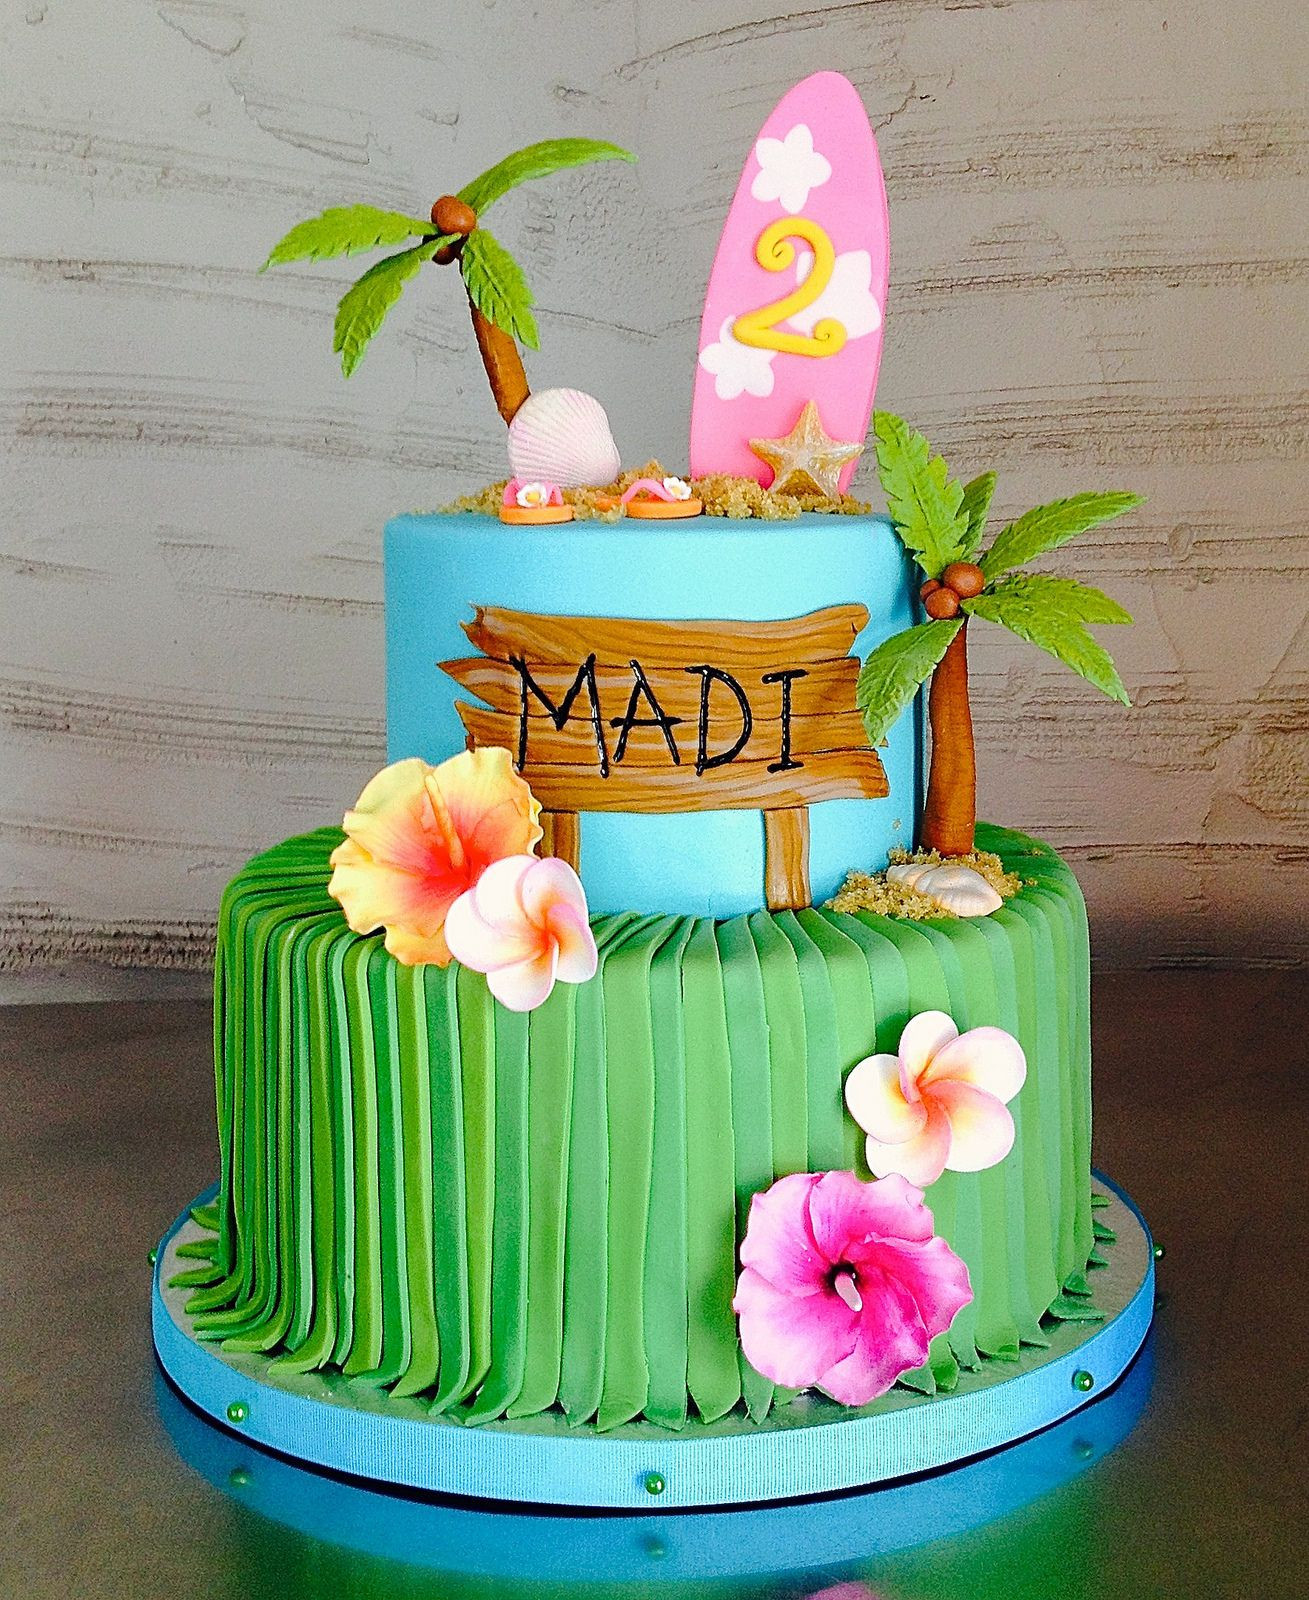 Best ideas about Hawaiian Birthday Cake
. Save or Pin Hawaiian Beach 2nd Birthday Cake Now.